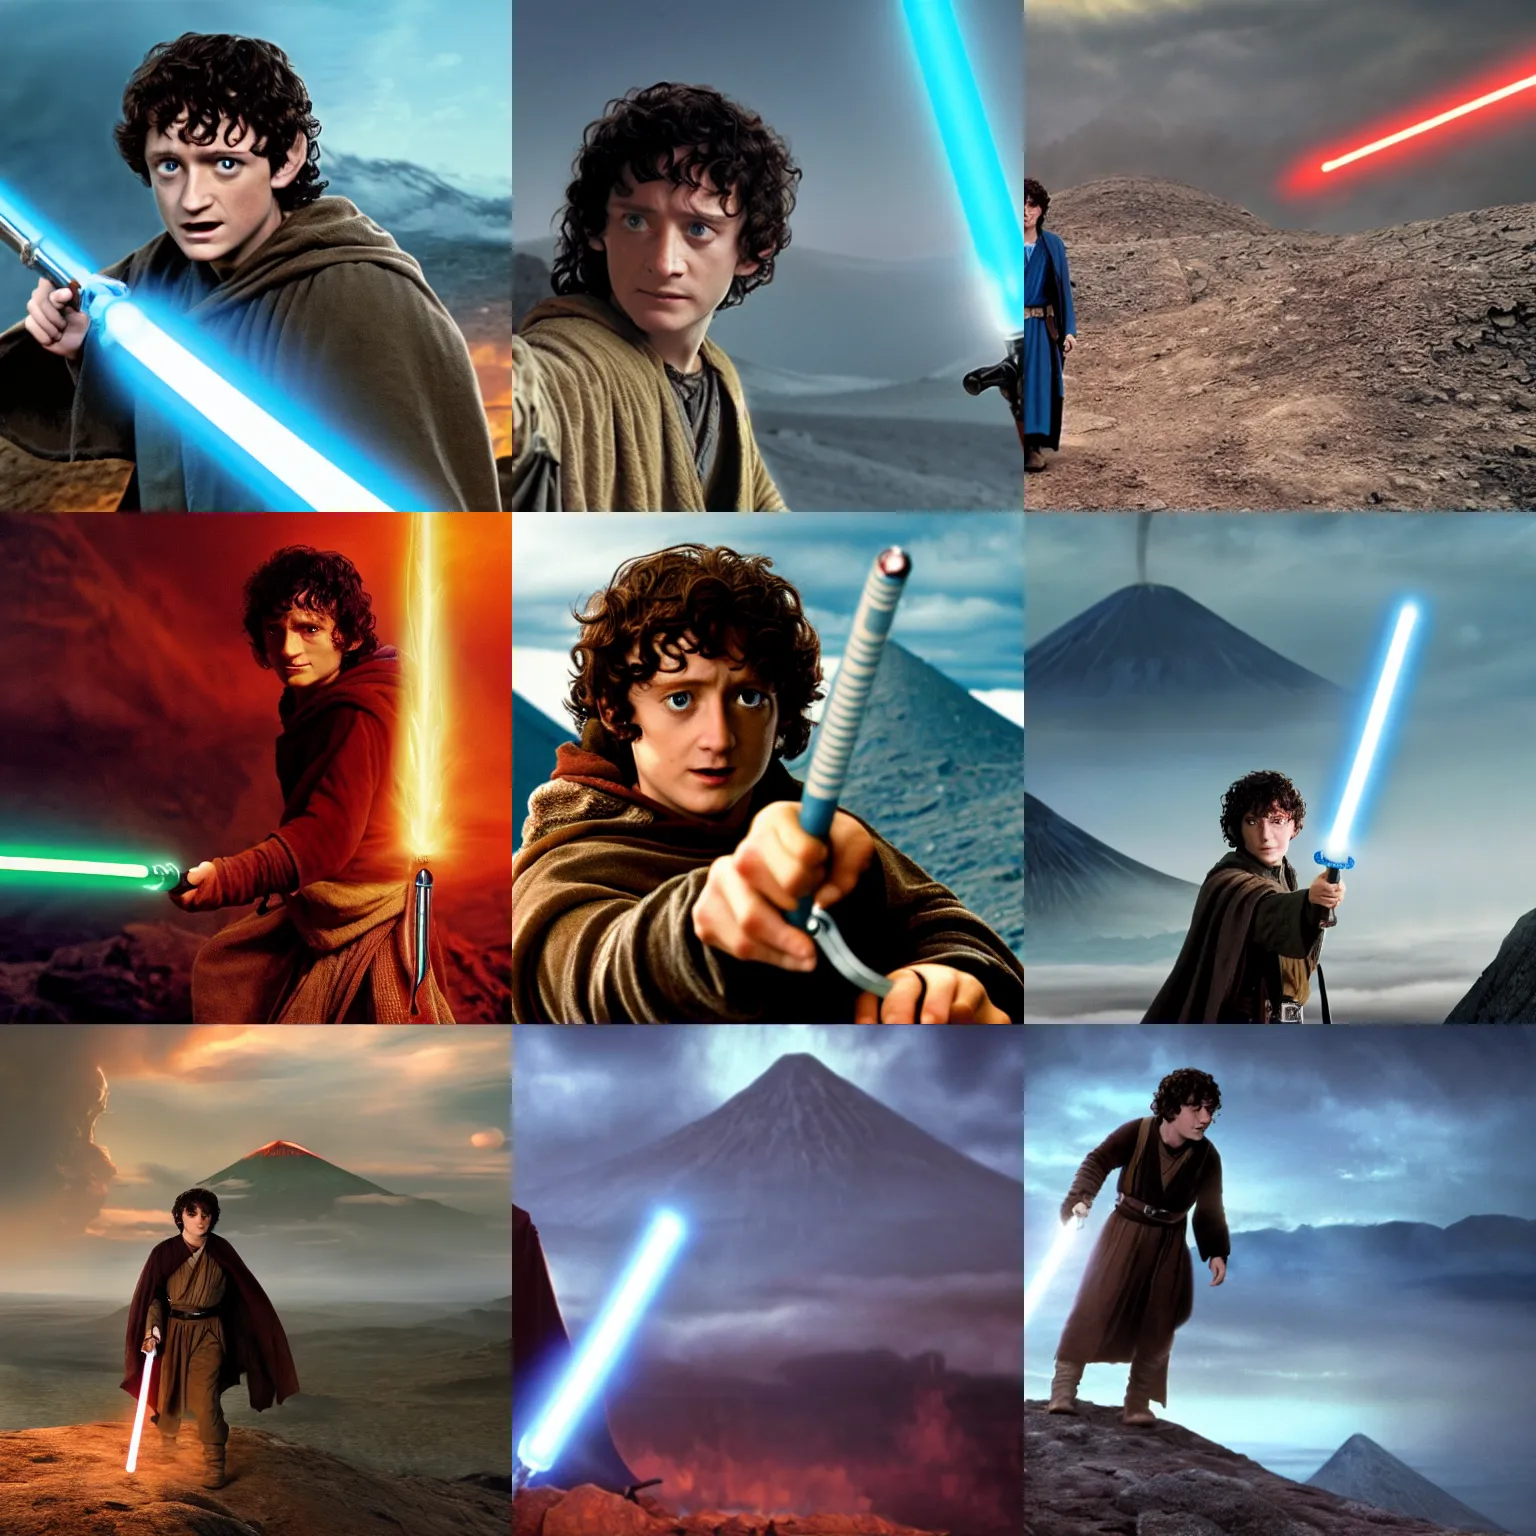 Prompt: Frodo Baggins with a blue lightsaber on Mount Doom, 4k movie still